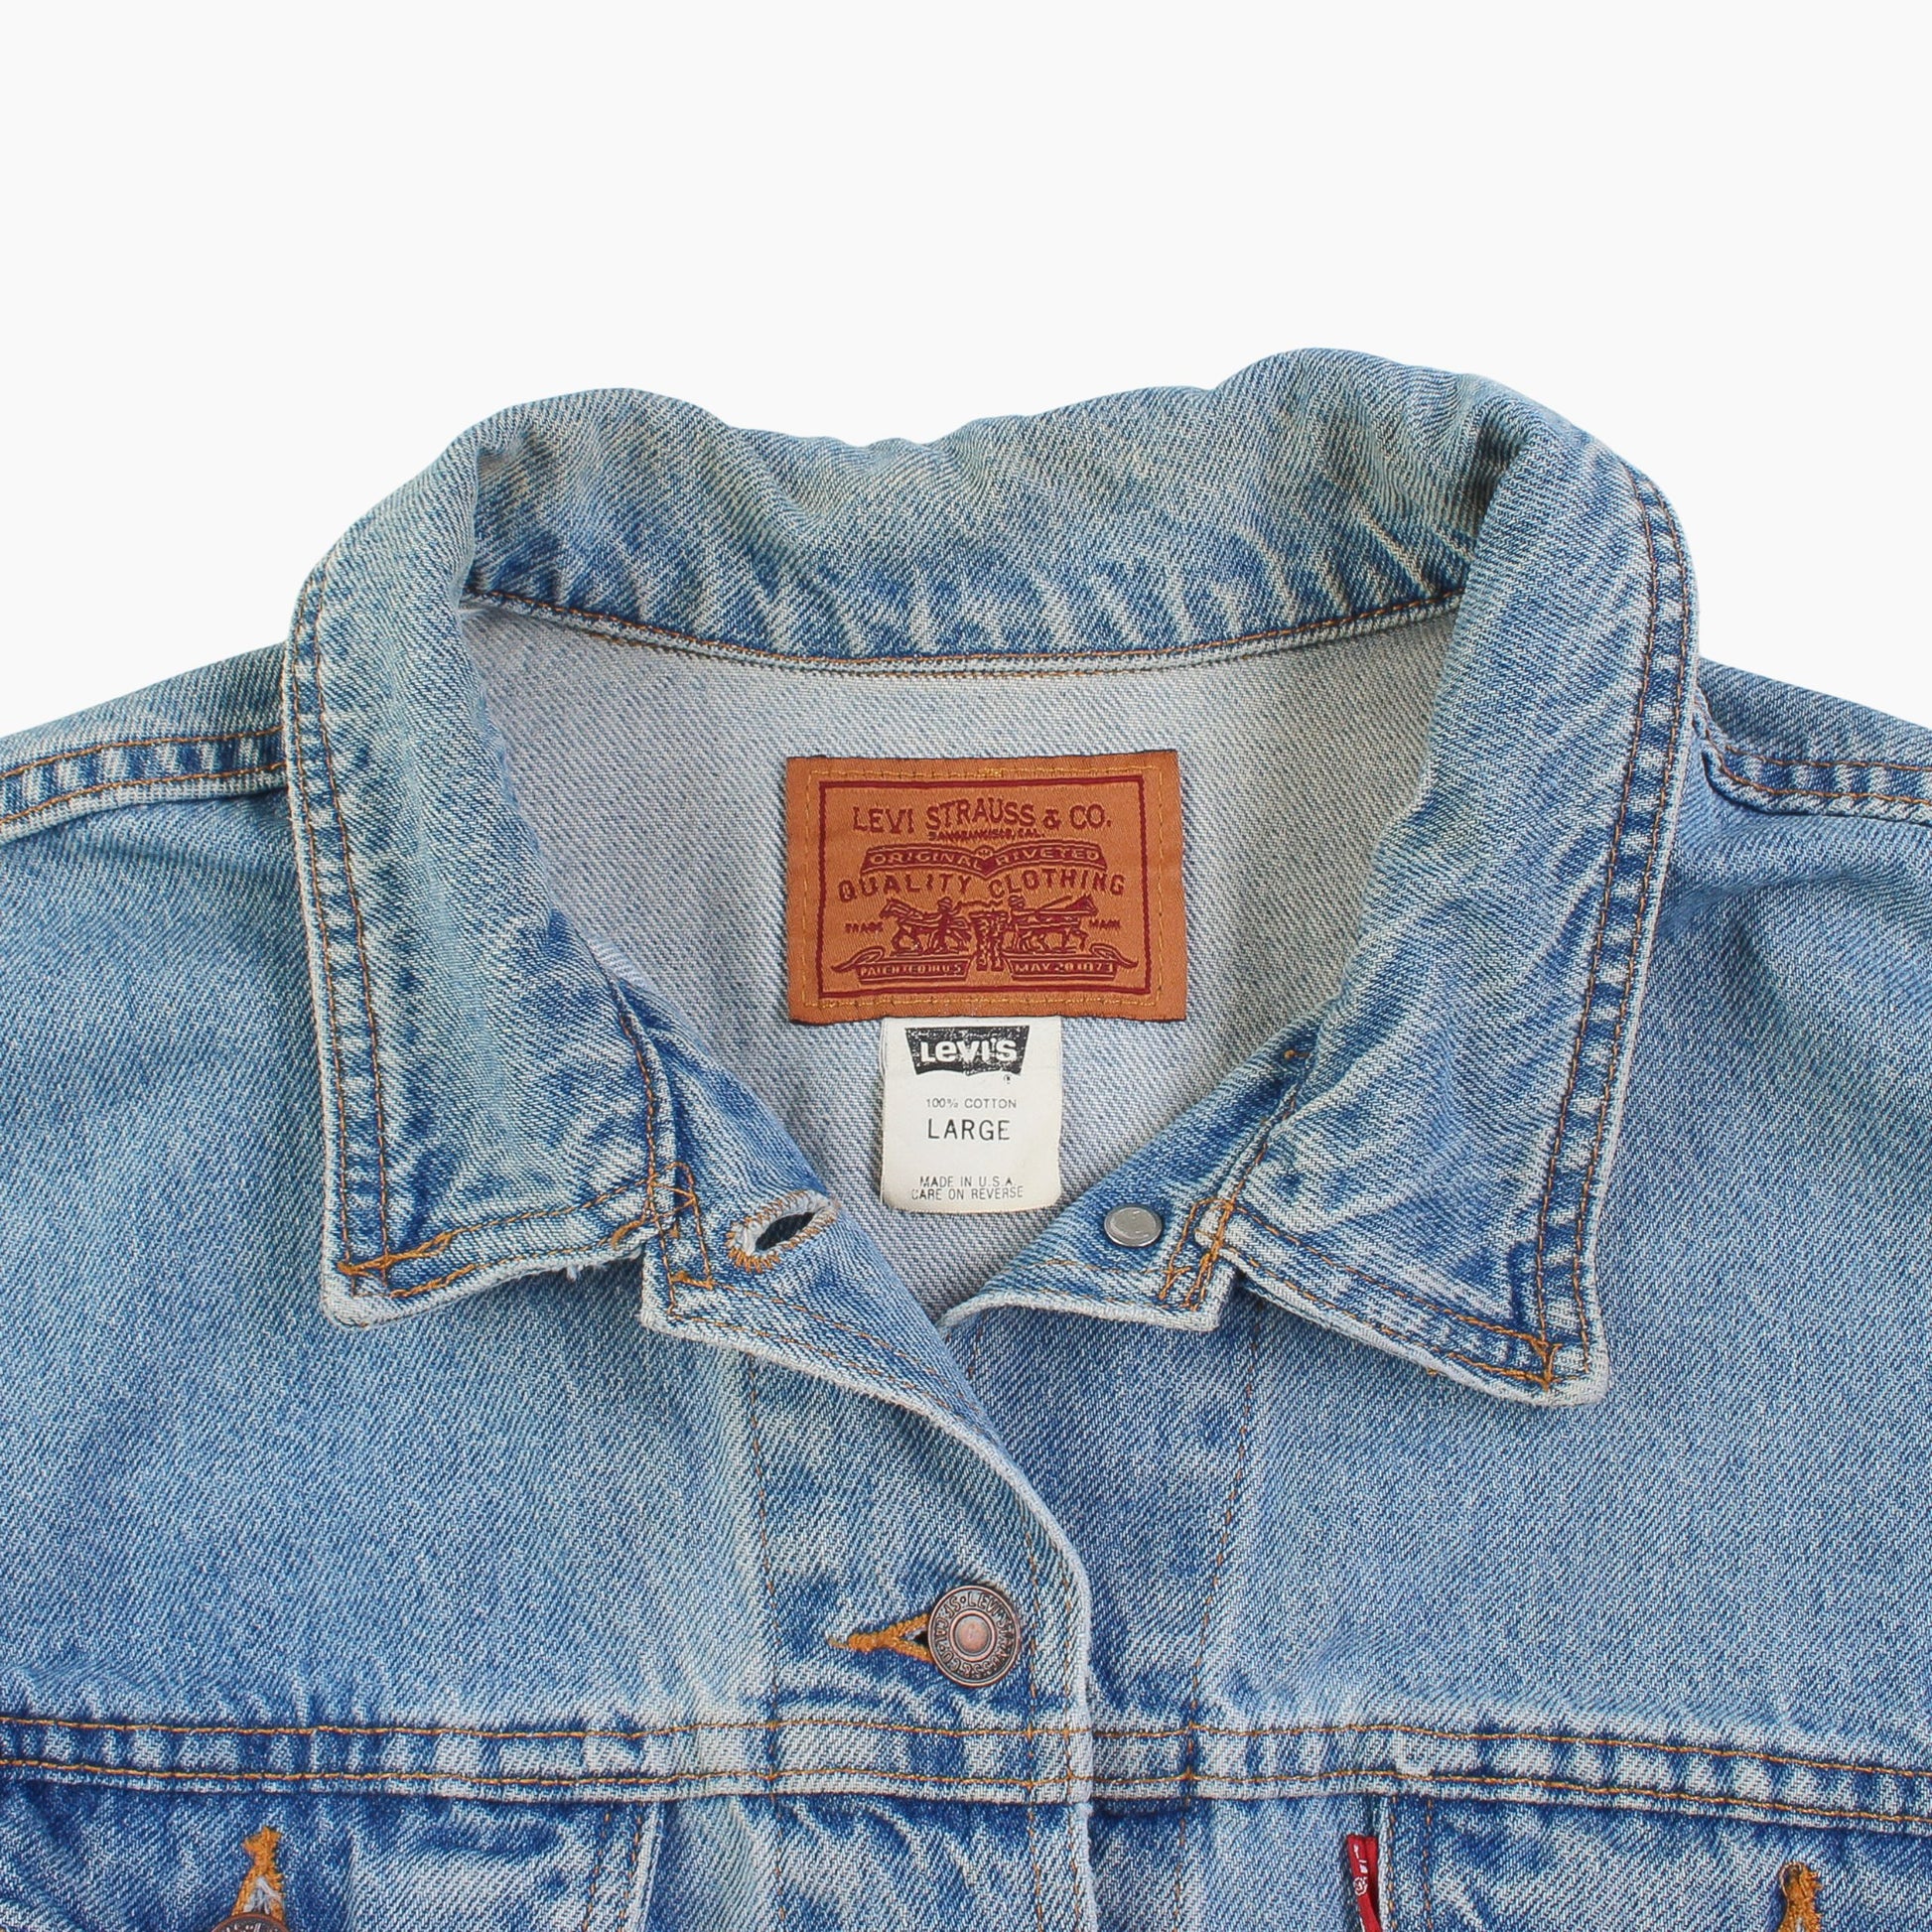 Vintage Denim Jacket - American Madness